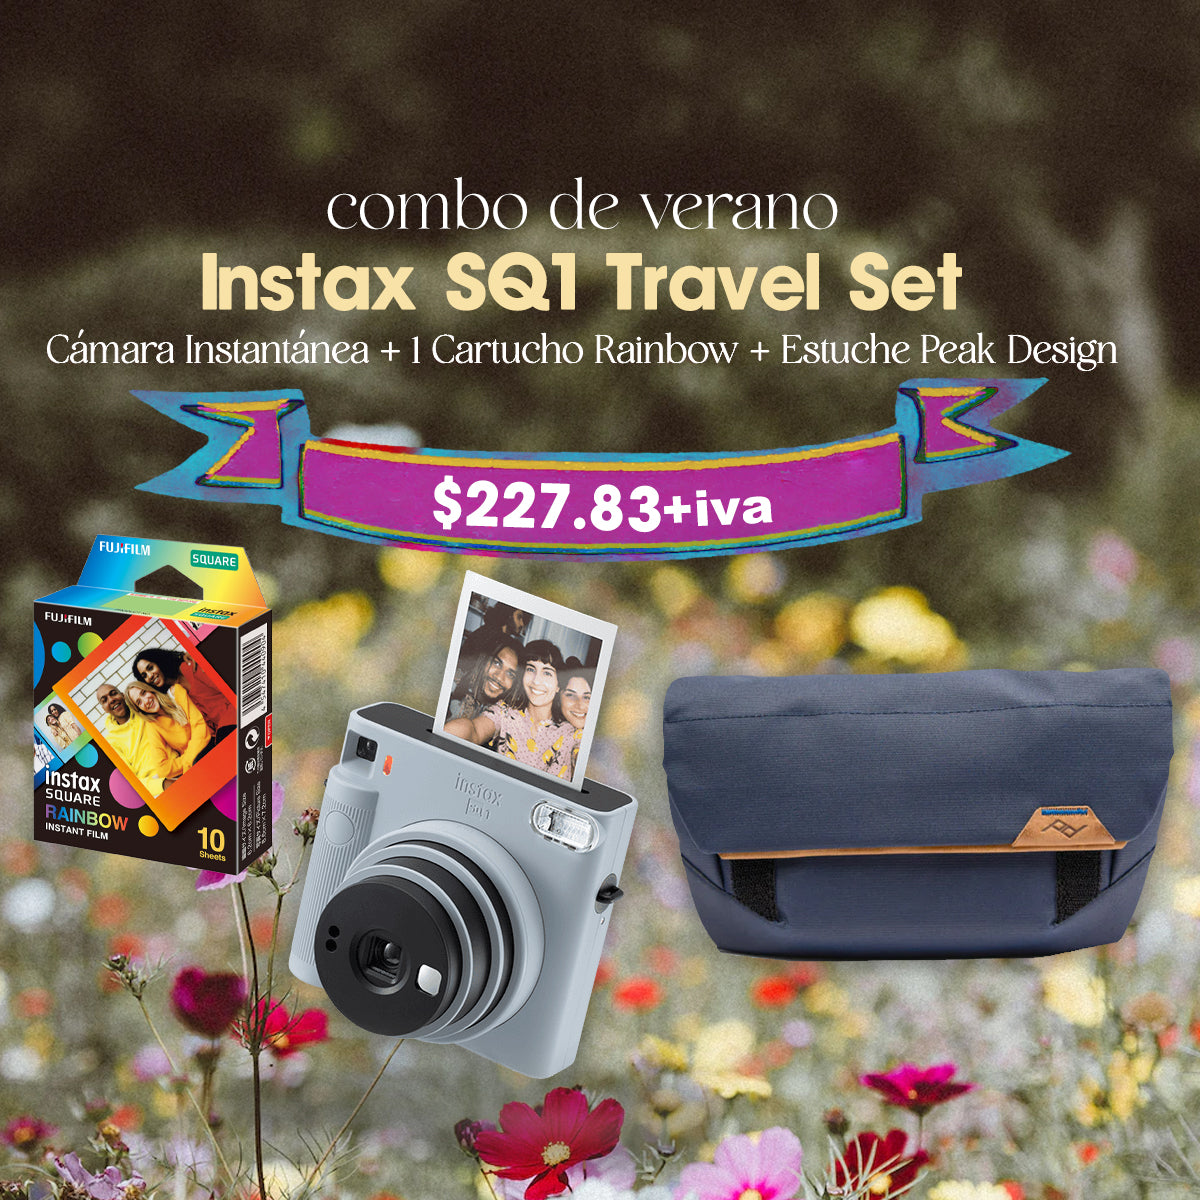 Instax Square SQ1 Travel Set